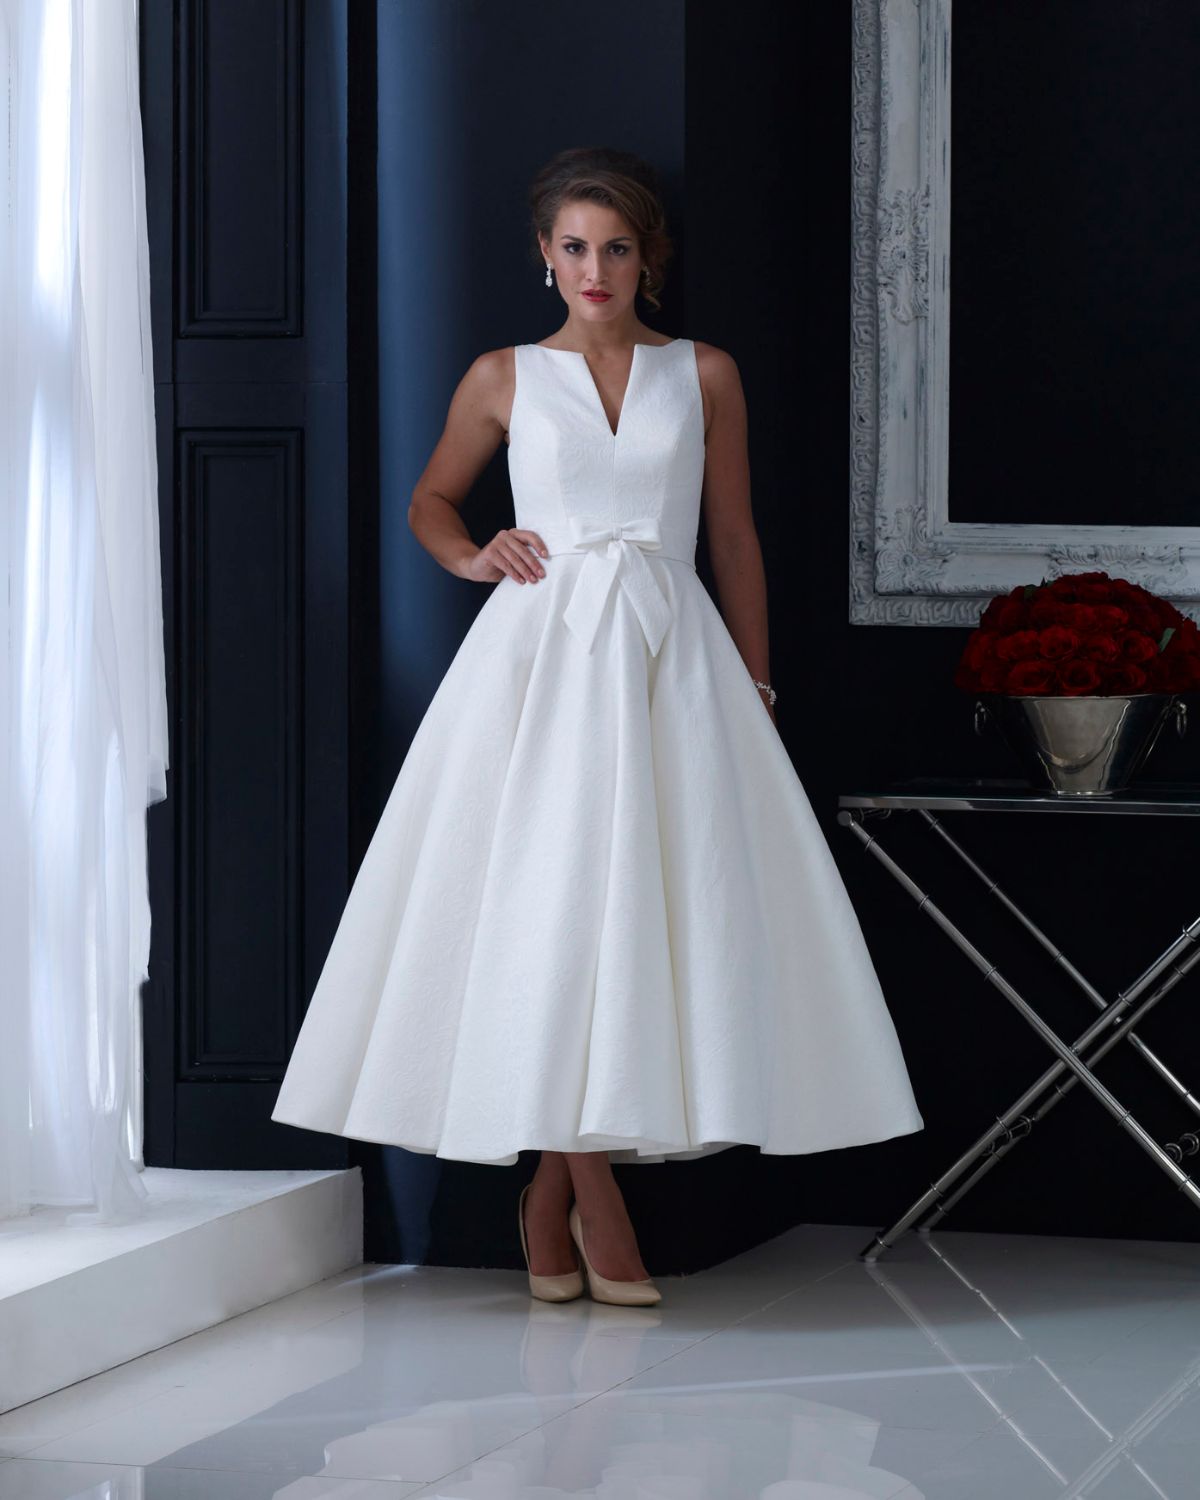 Best Dress 2 Impress Bridal-Image-85